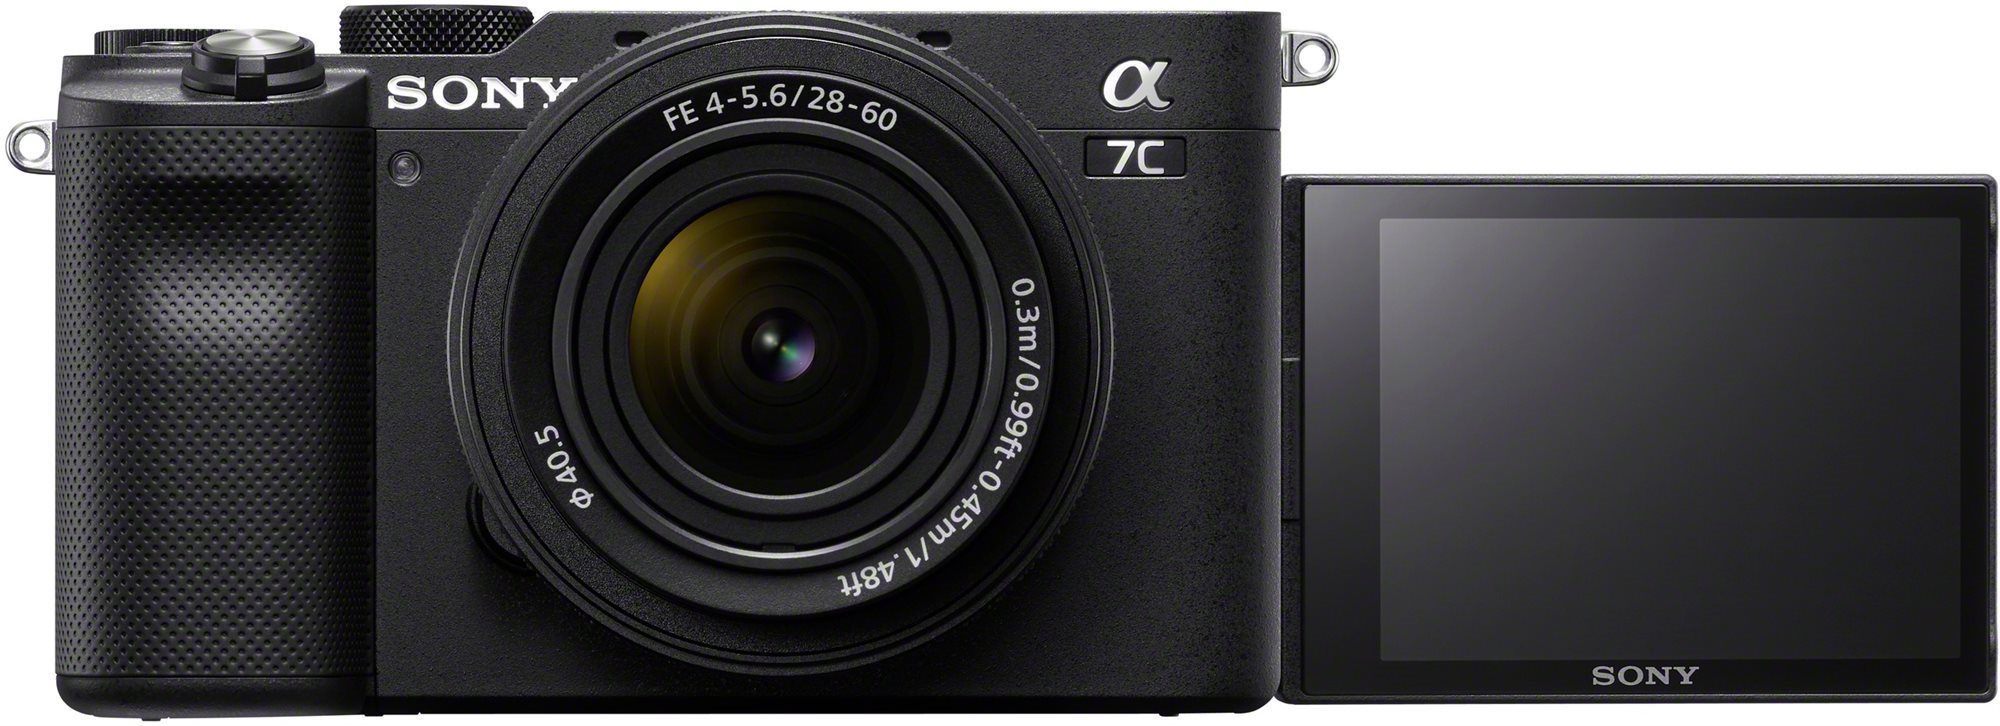 Sony Alpha A7C + FE 28-60mm f/4-5.6 fekete